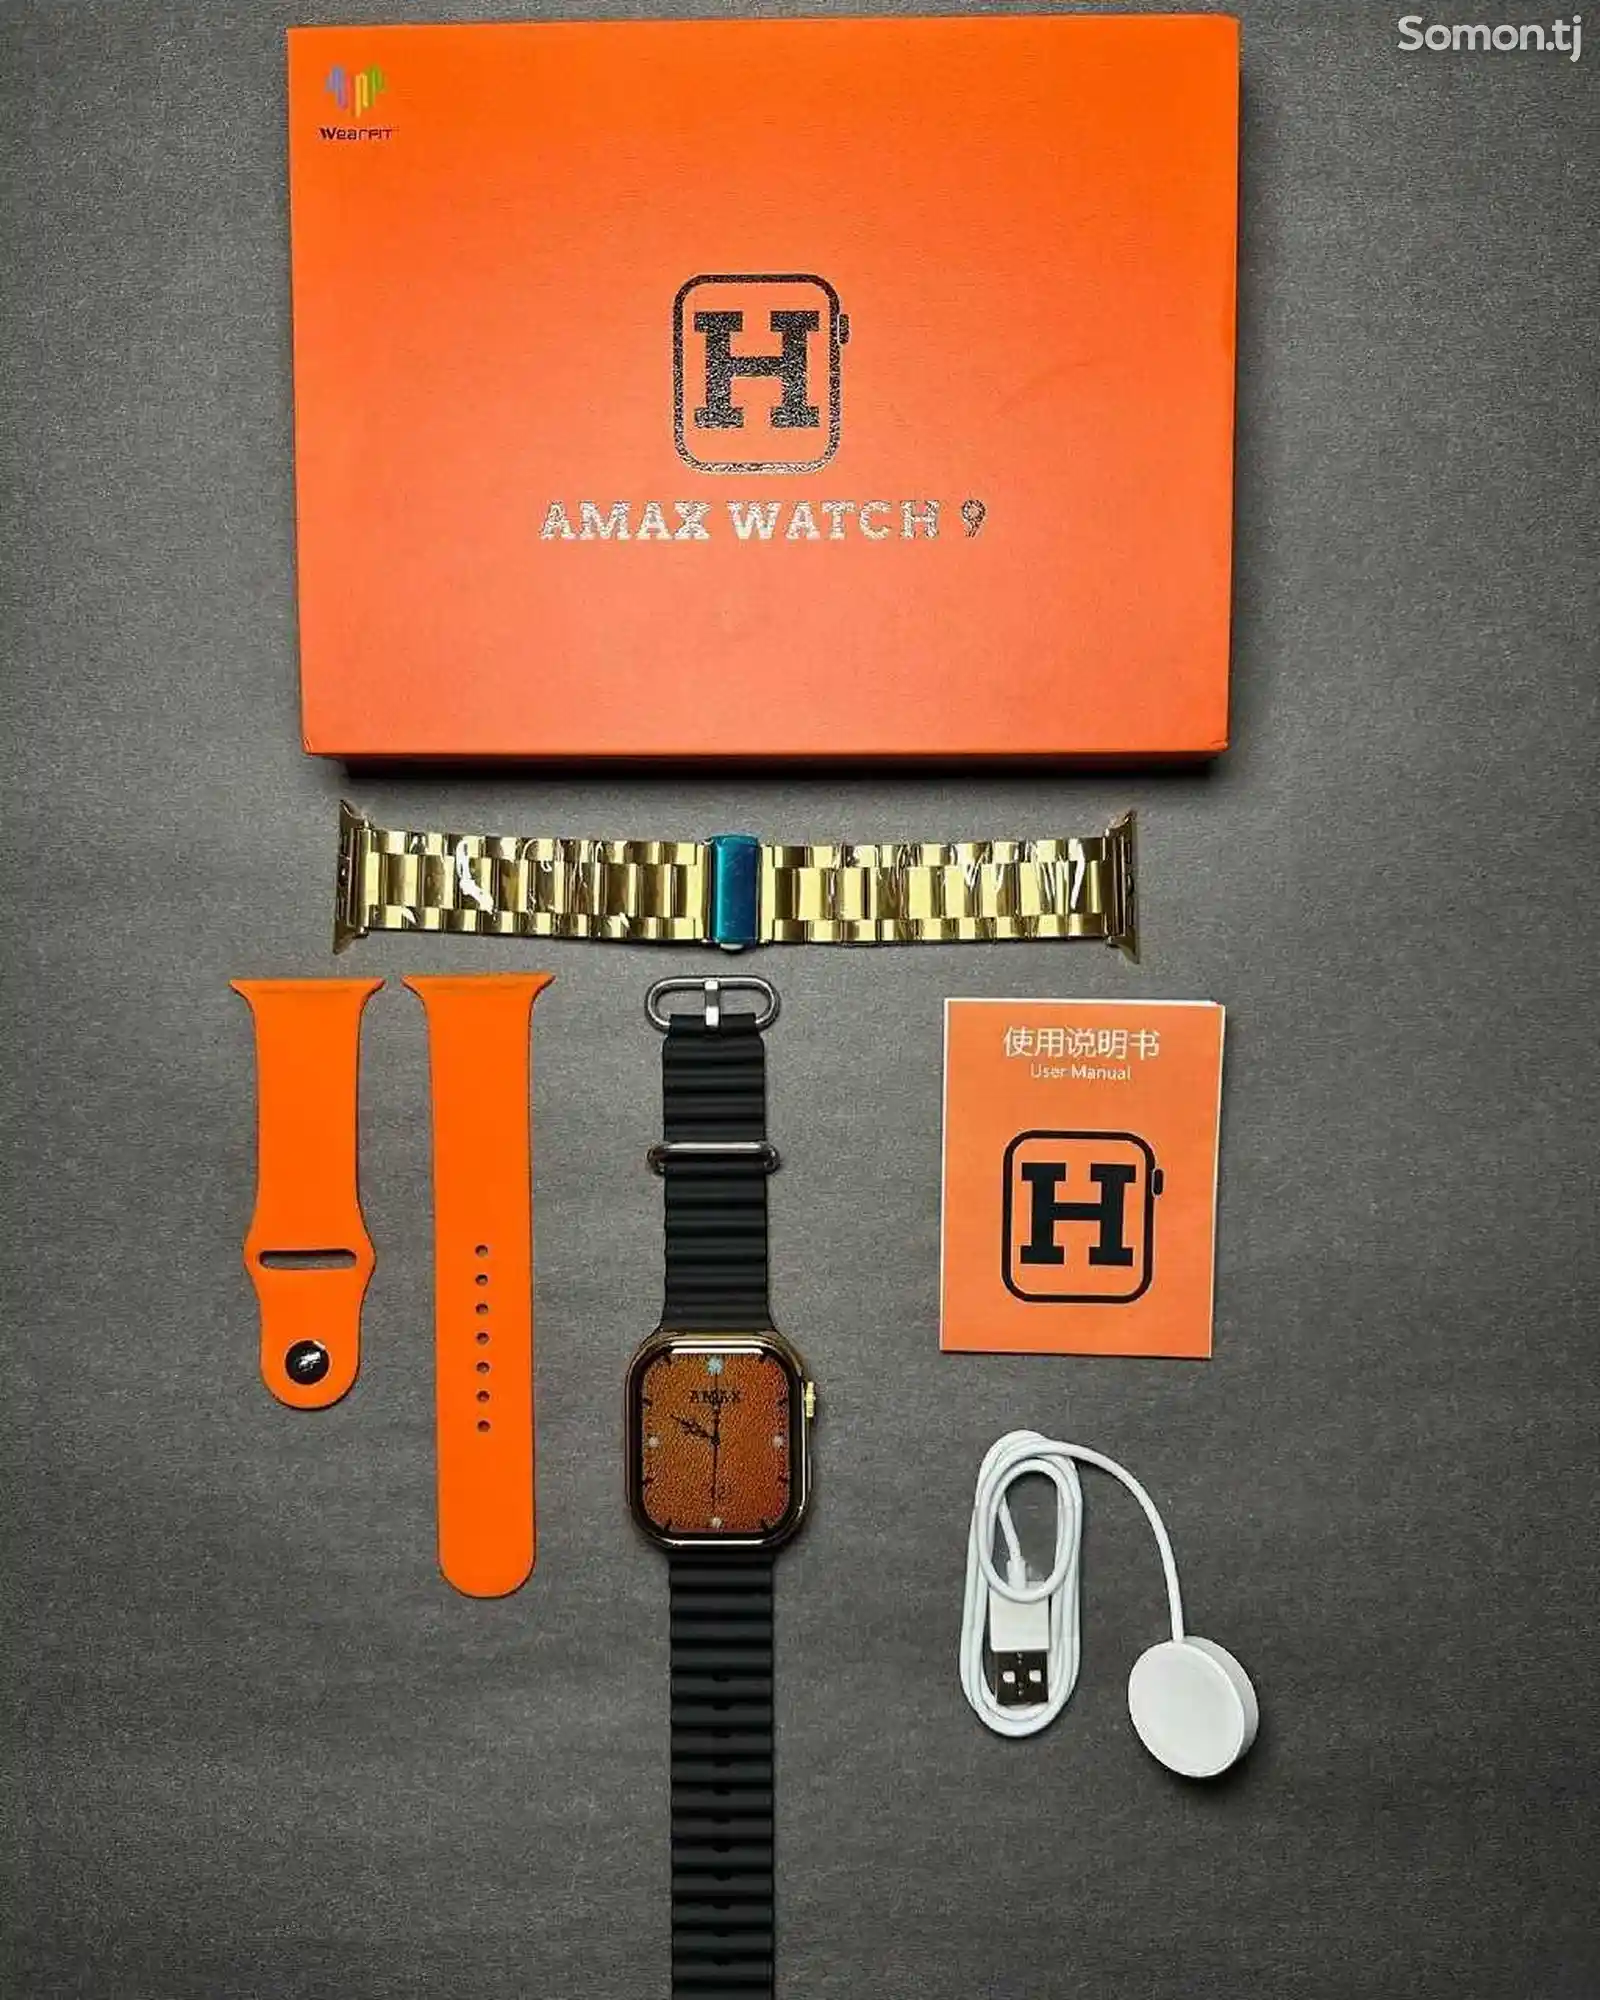 Смарт часы Amax Watch 9-1